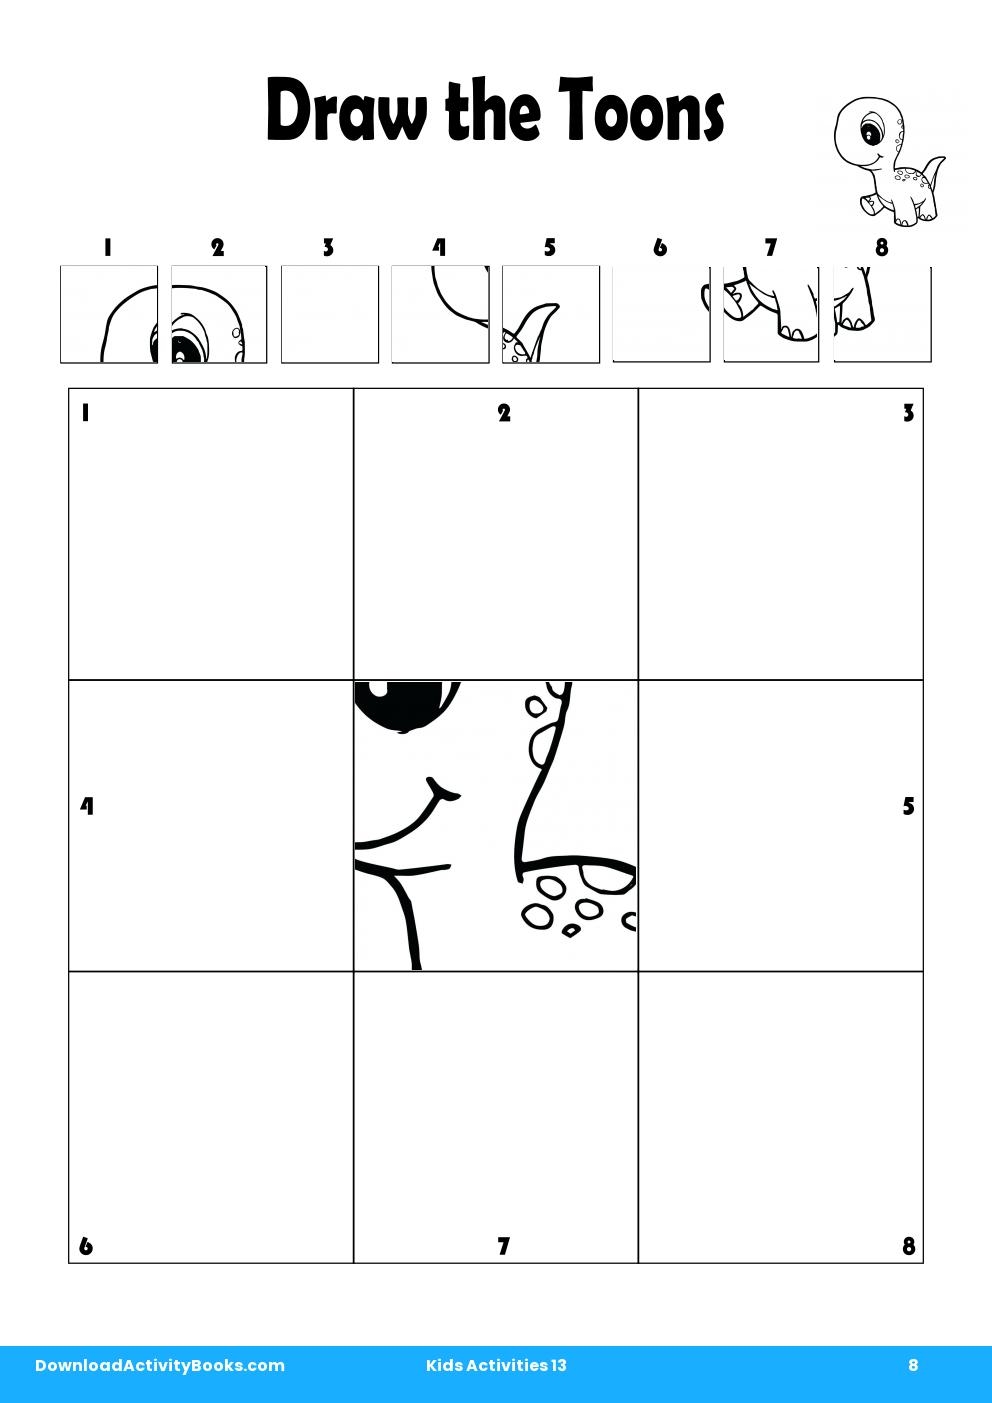 Draw The Toons in Kids Activities 13